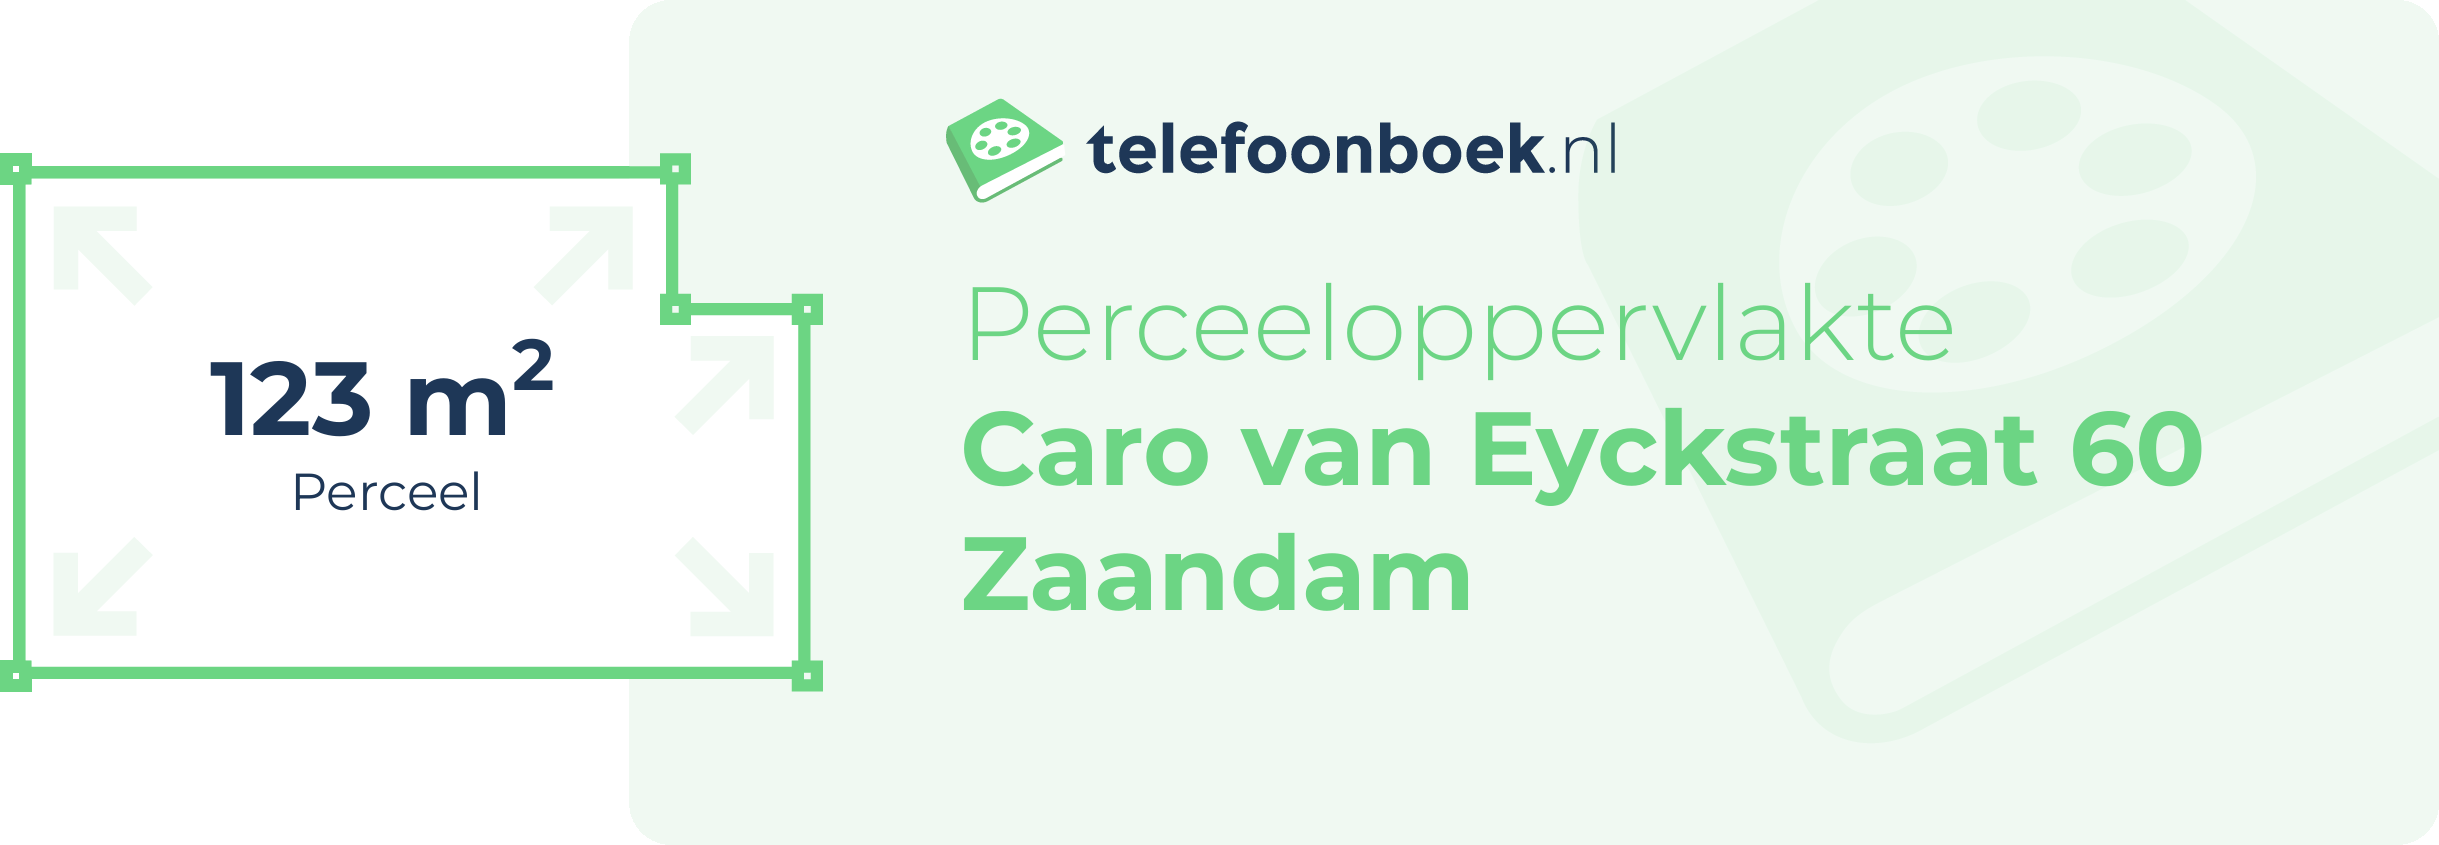 Perceeloppervlakte Caro Van Eyckstraat 60 Zaandam